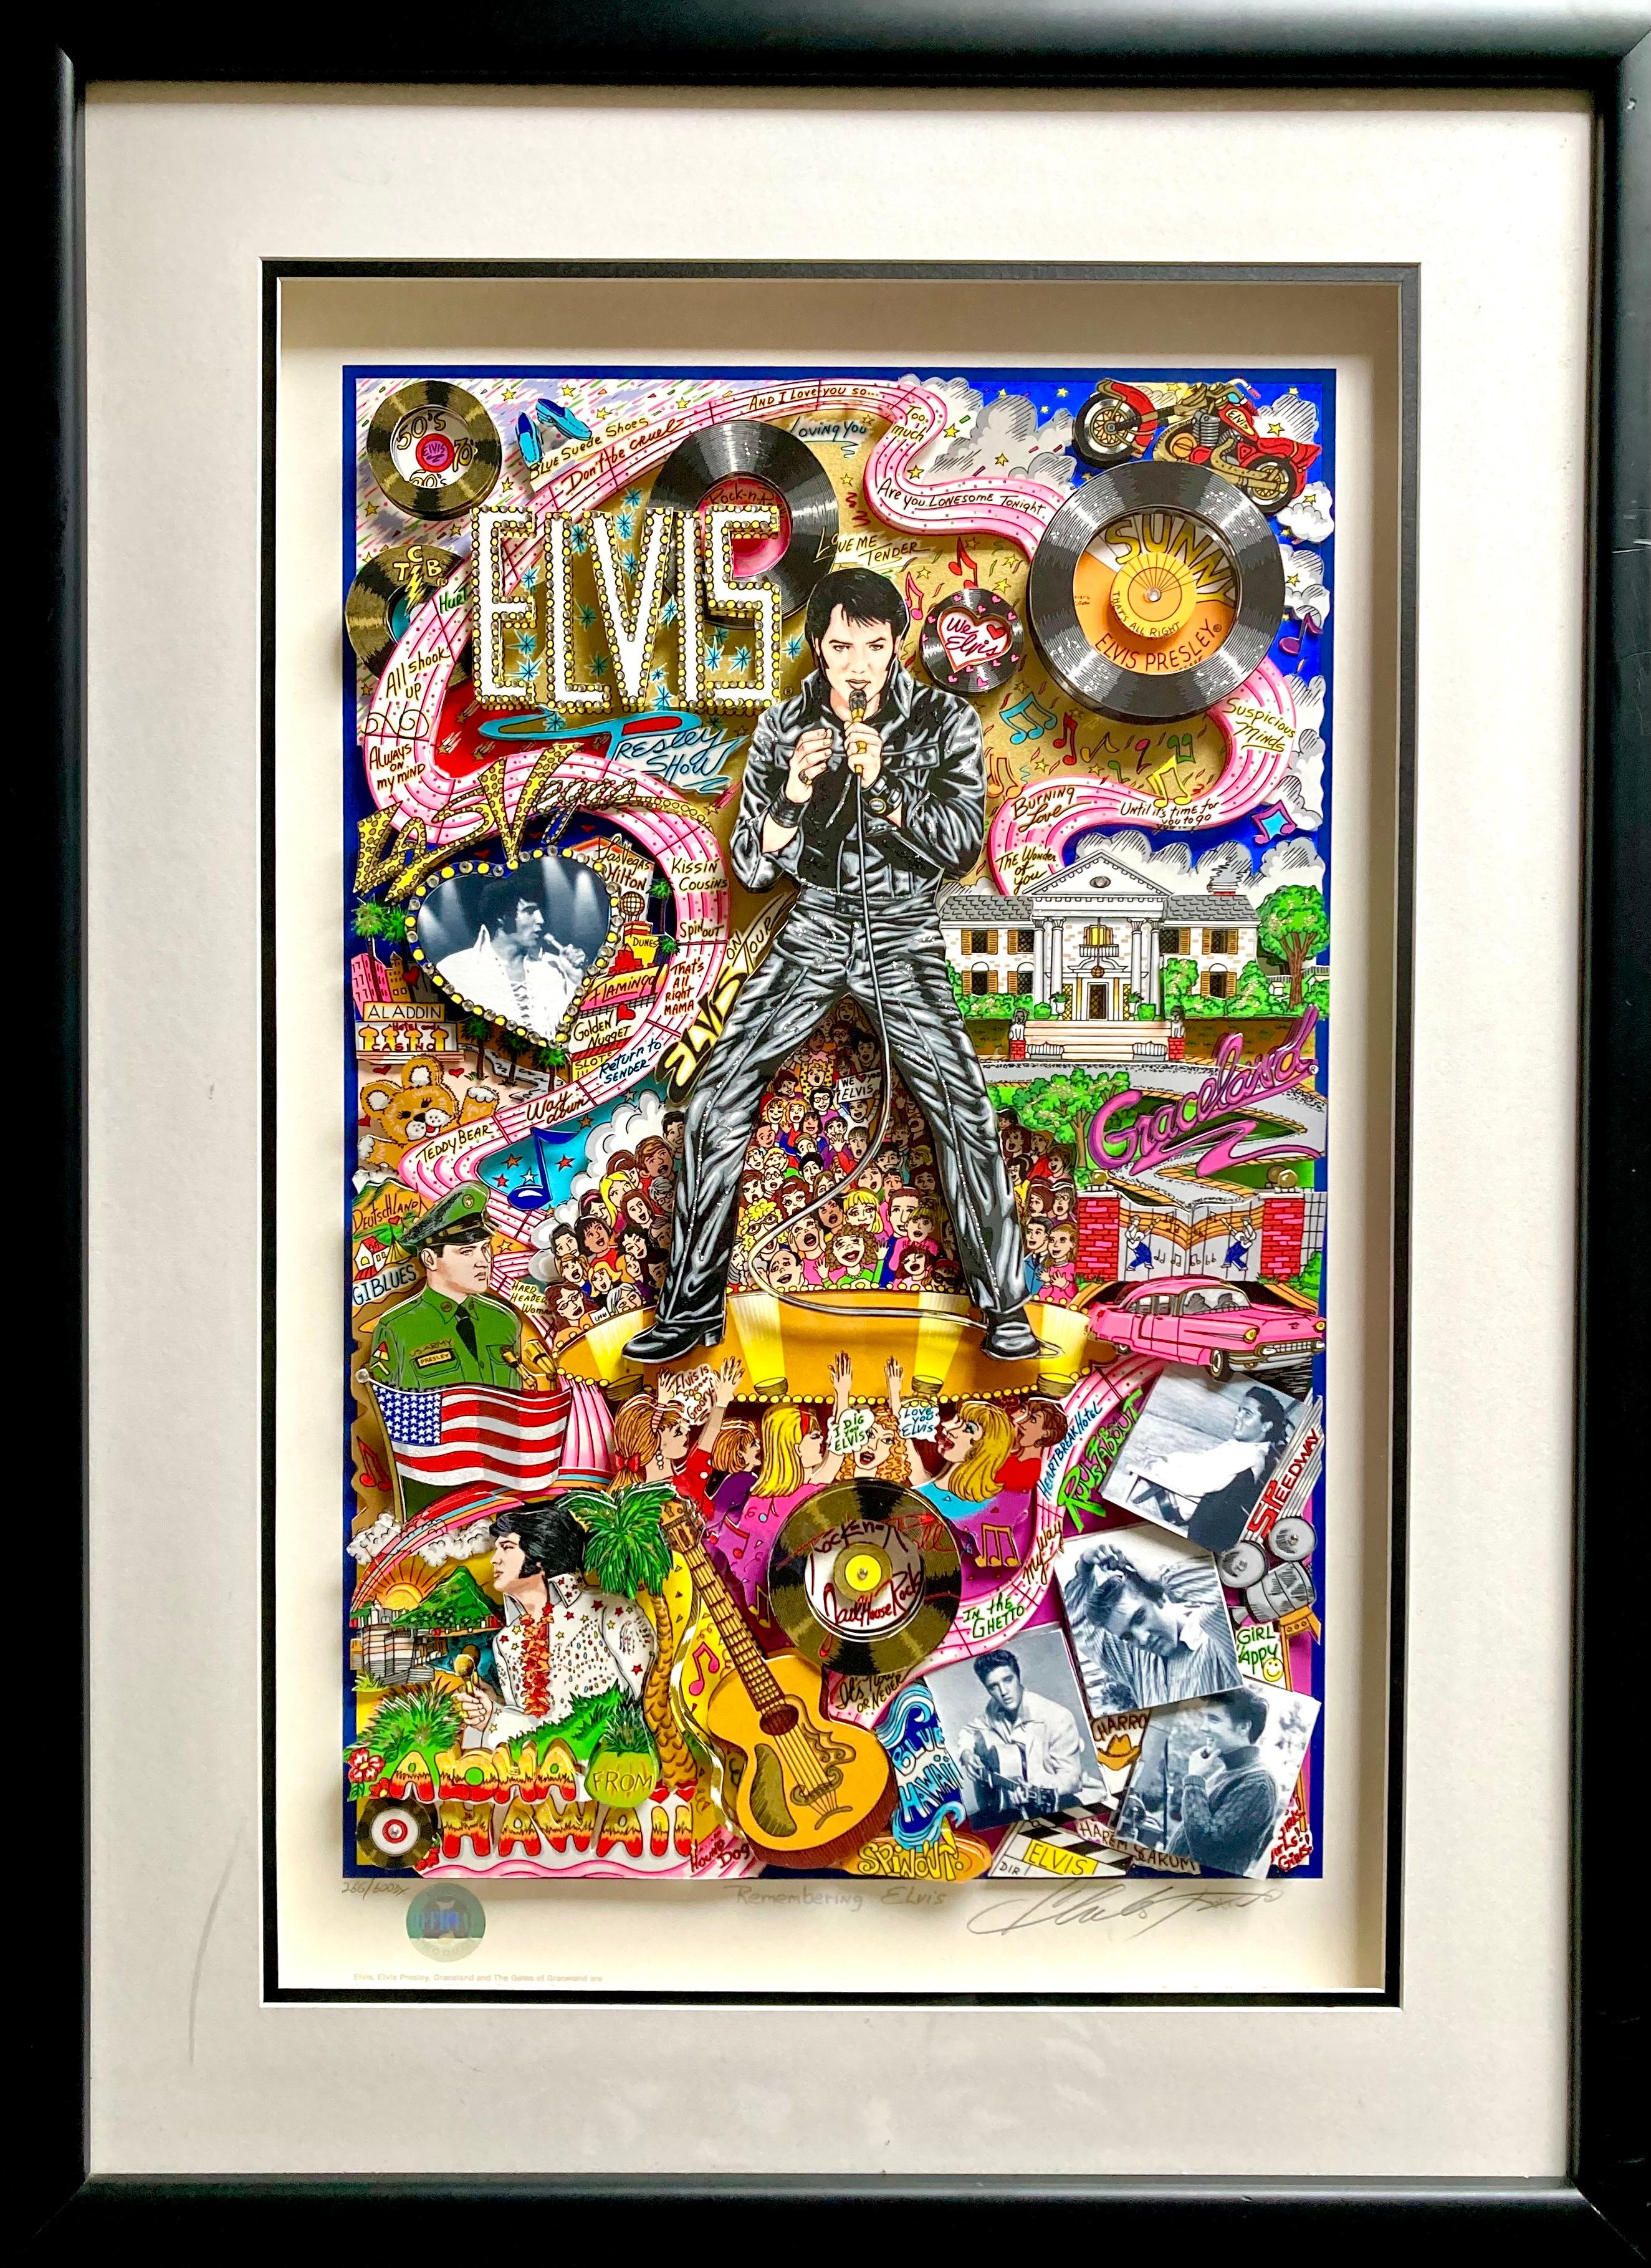 "Elvis" - Print by Charles Fazzino